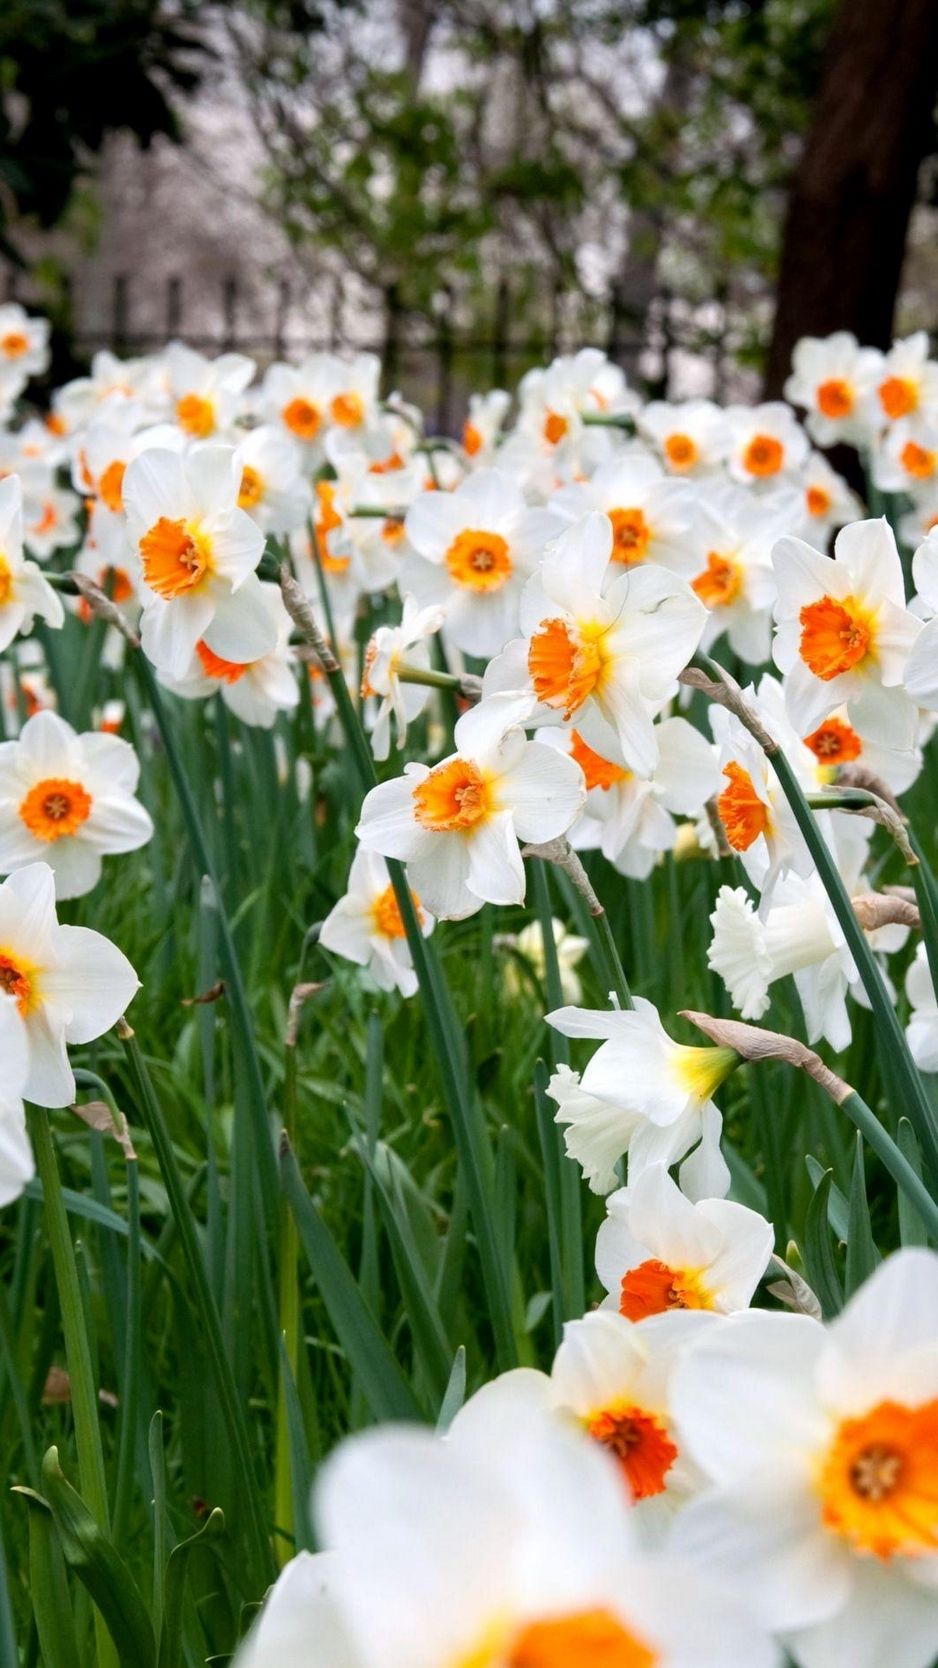 Download wallpaper 938x1668 daffodils, flowers, herbs, lawn